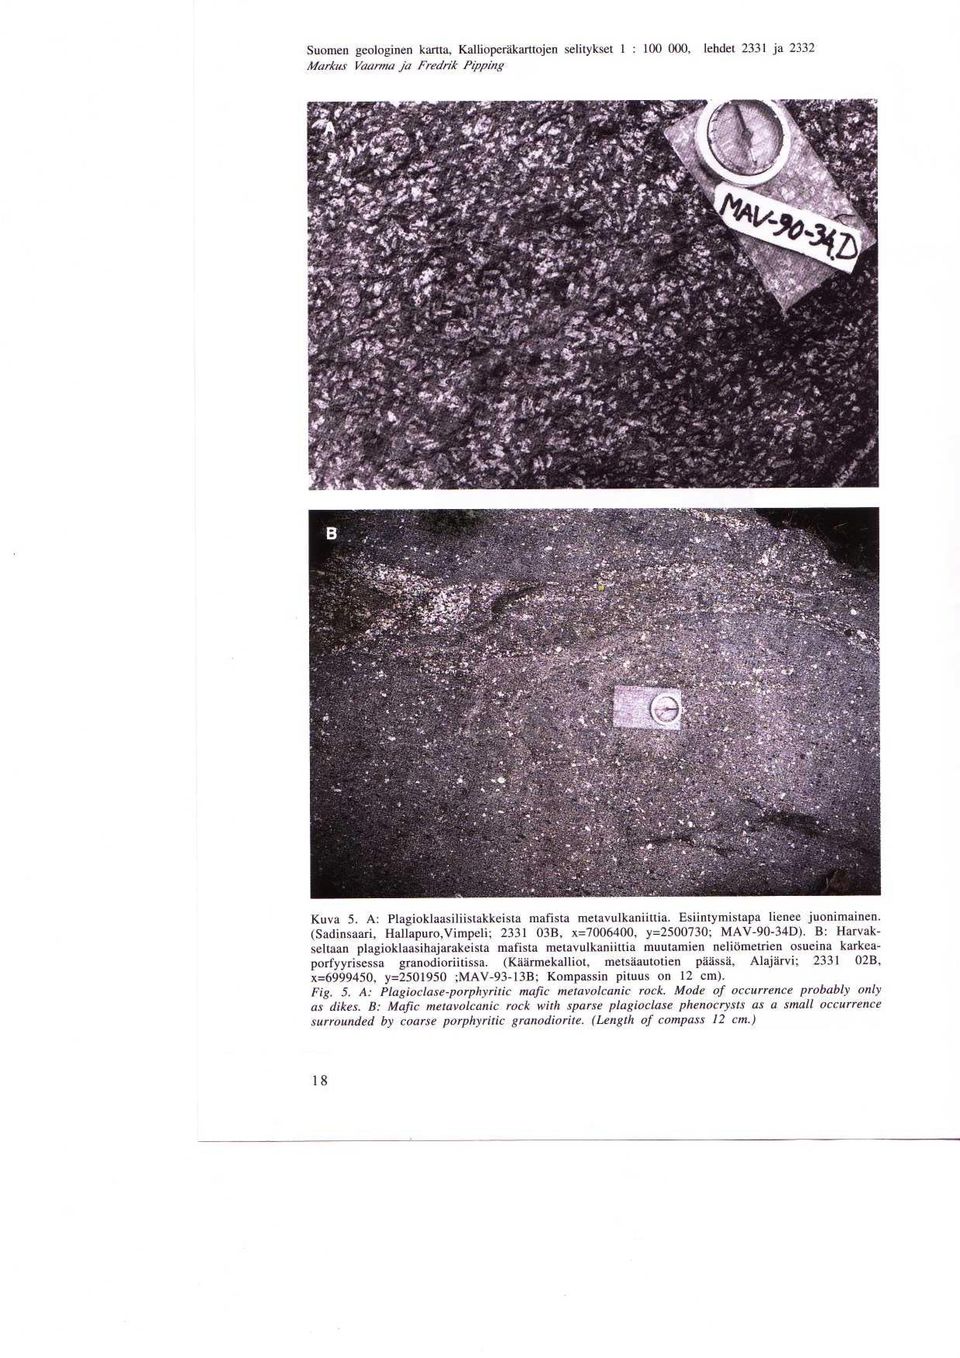 karkeaporfyyrisessa granodioriitissa (Kaarmekalliot, metsaautotien paassa, Alajarvi ; 2331 02B, x=6999450, y=2501950 ;MAV-93-13B ; Kompassin pituus on 12 cm) Fig 5 A : Plagioclase-porphyritic mafic